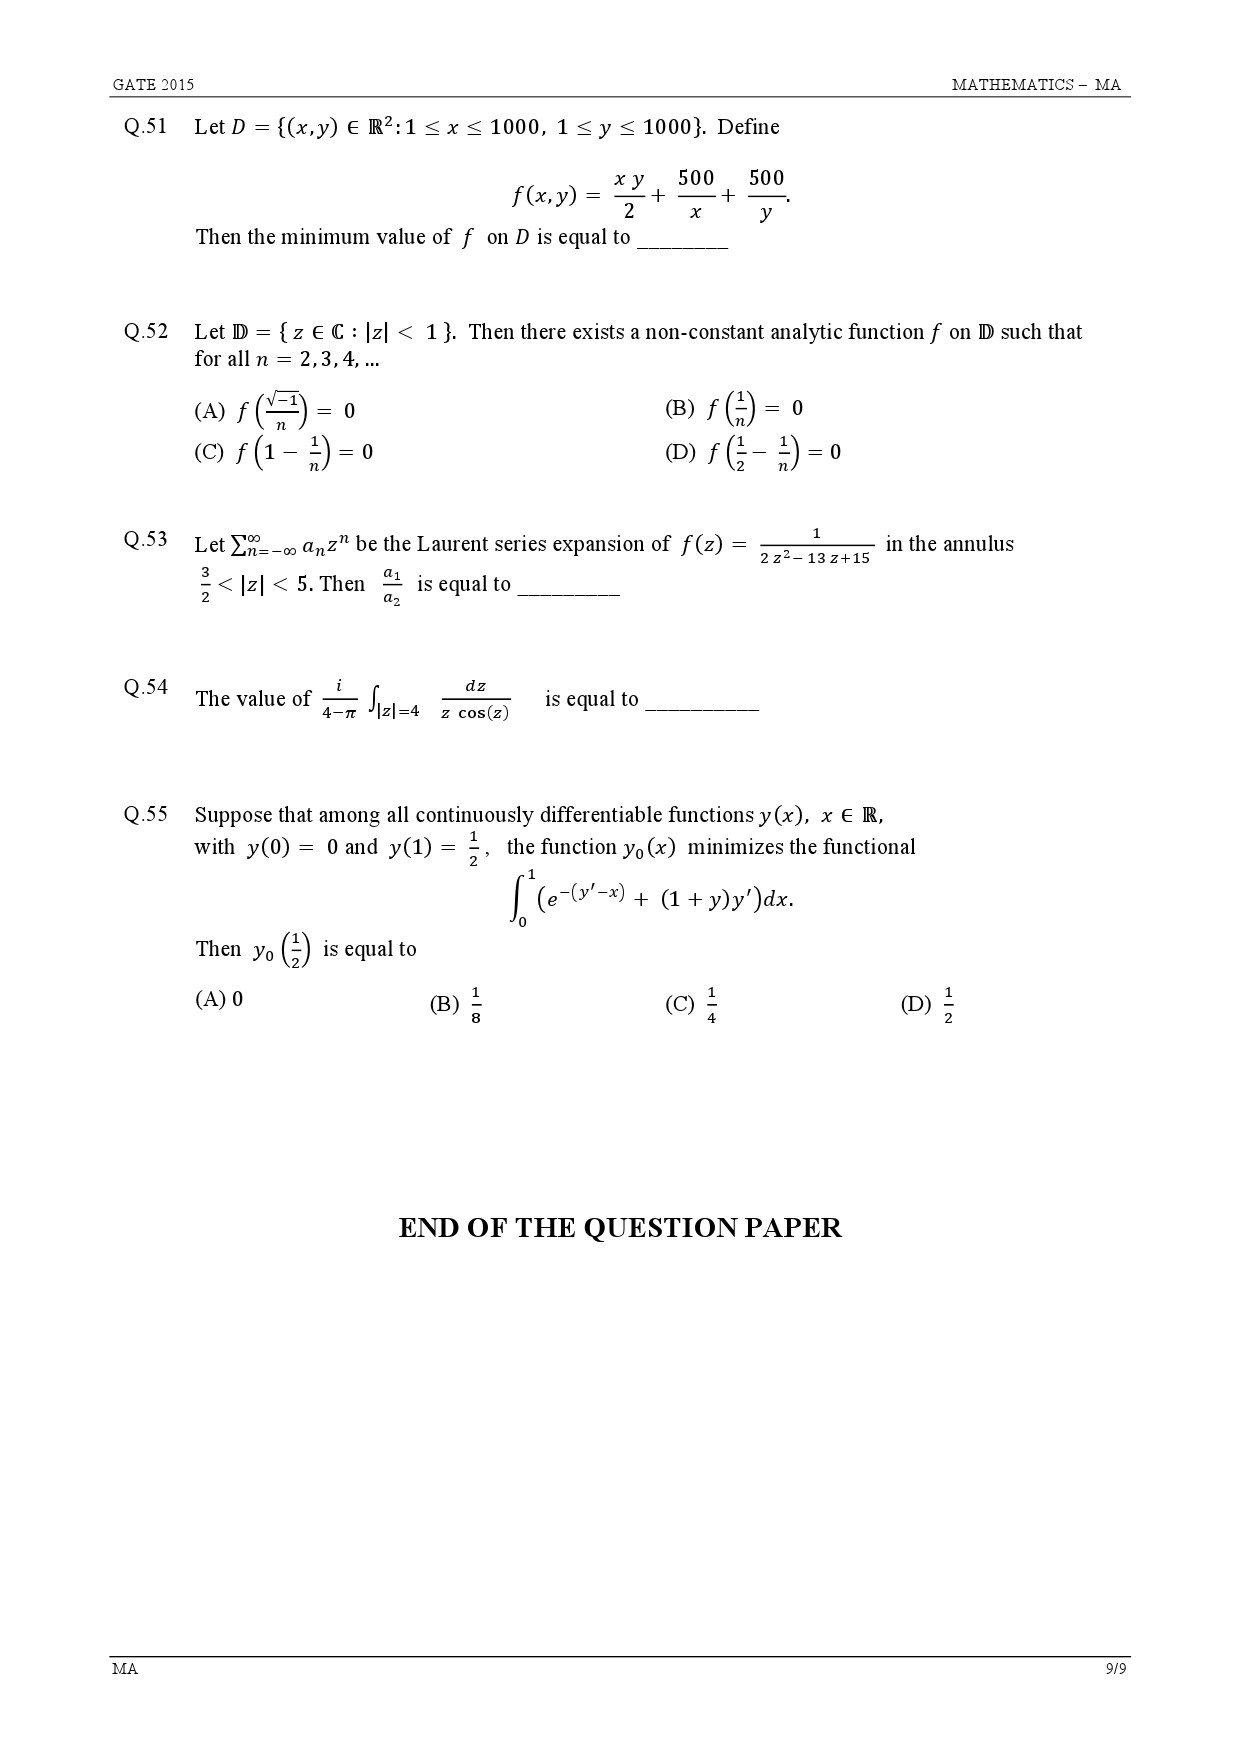 GATE Exam Question Paper 2015 Mathematics 9